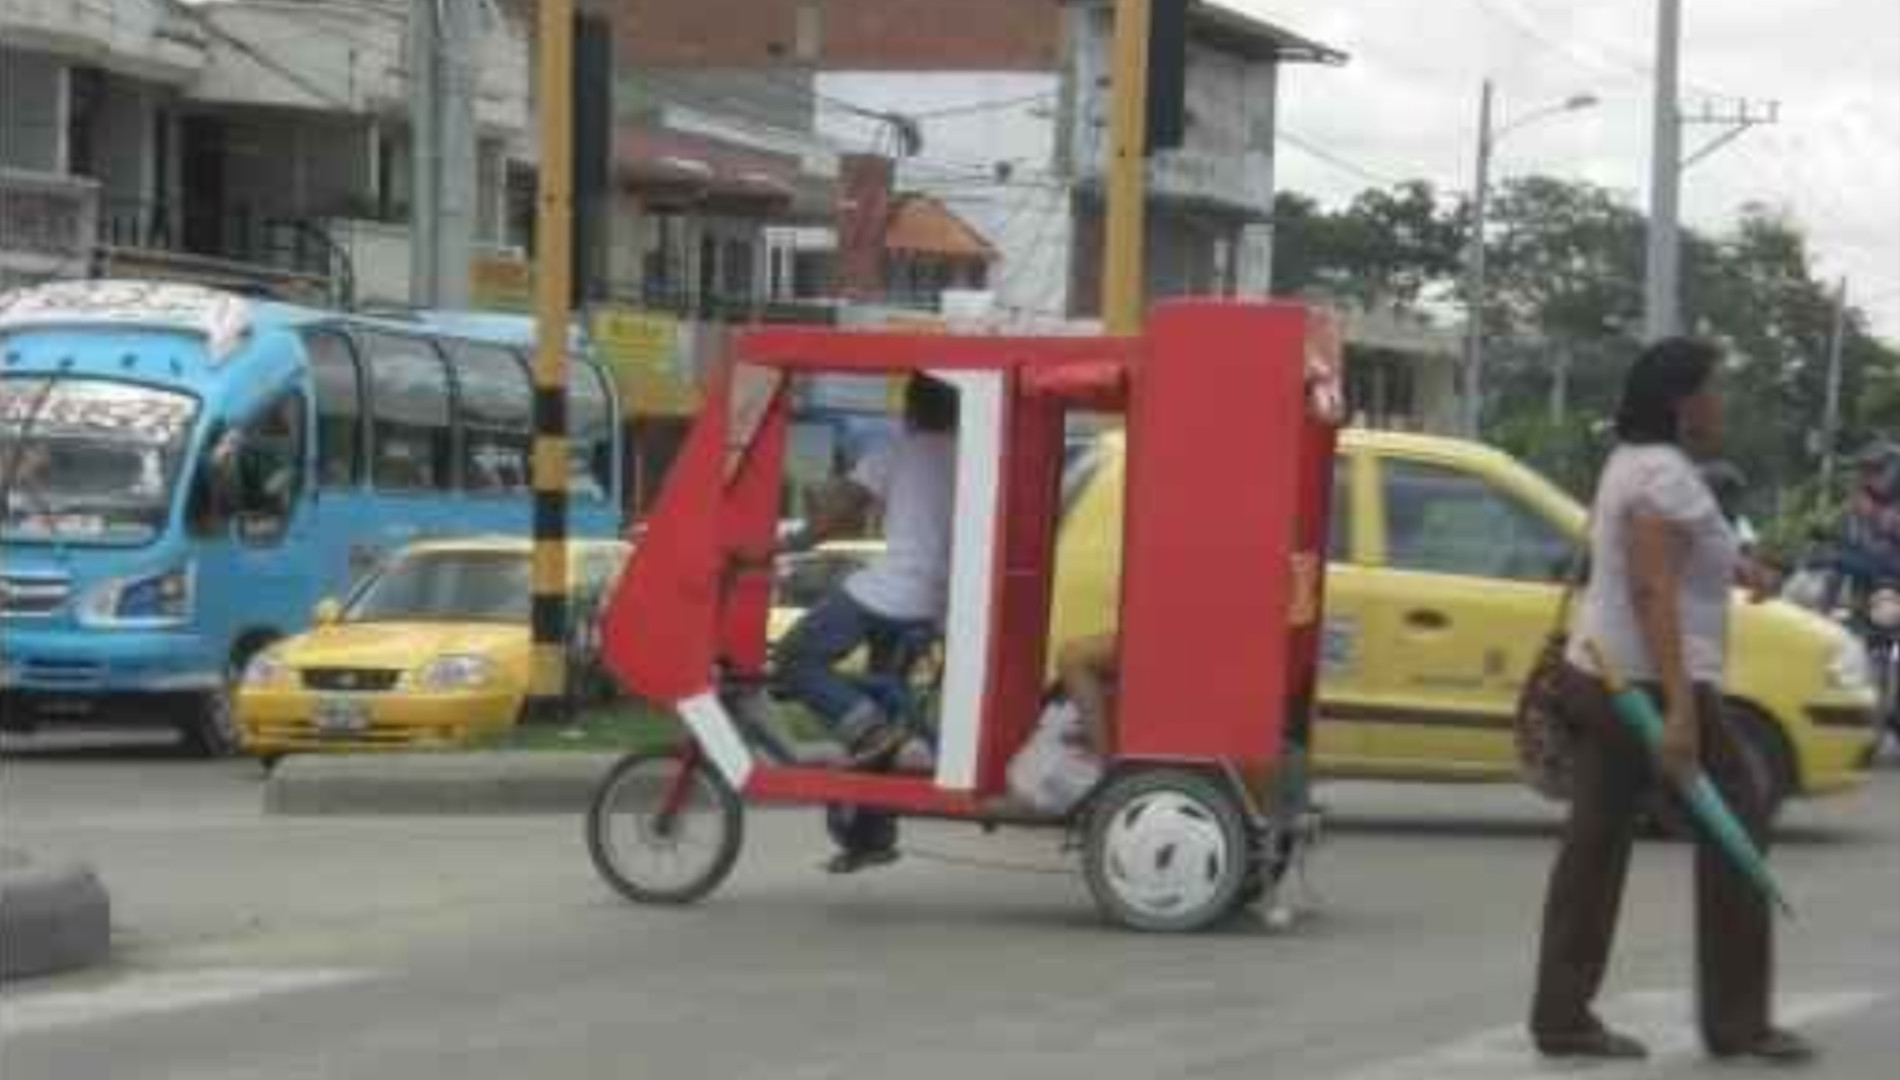 Imagen de referencia de un bicitaxi en Bogotá. Foto: Colprensa